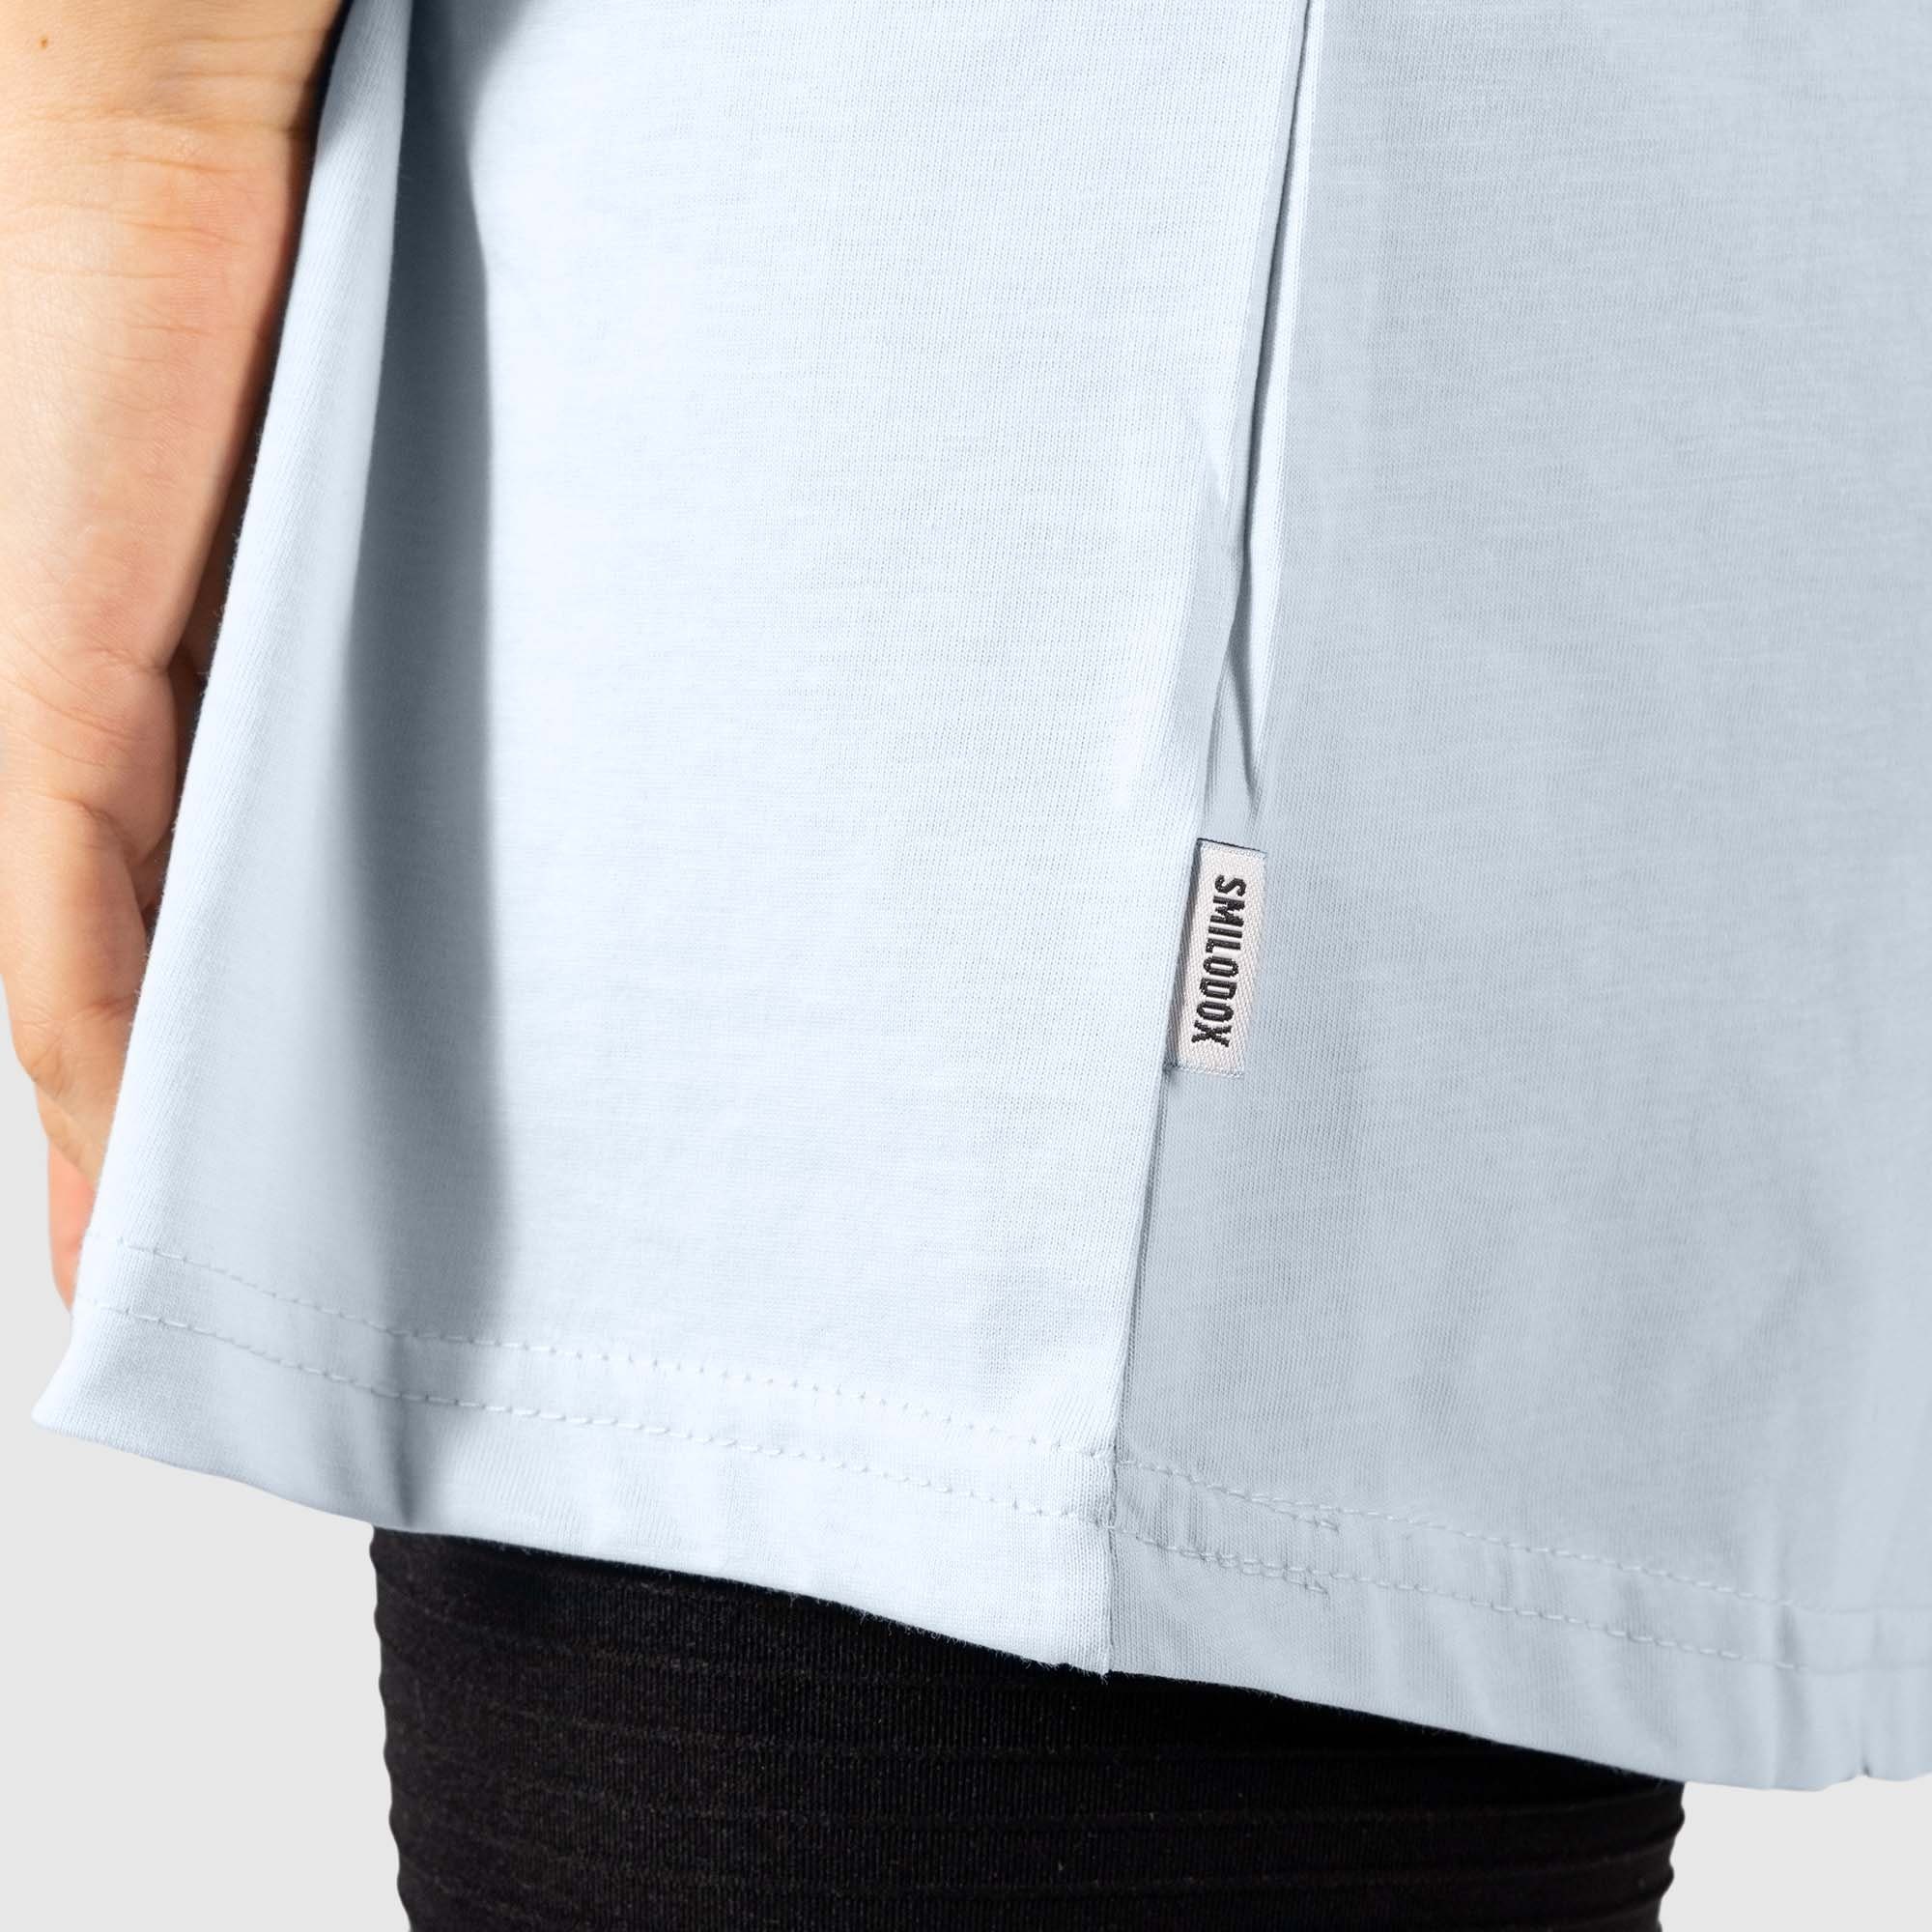 Hellblau Baumwolle Cheryl Oversize, Smilodox T-Shirt 100%